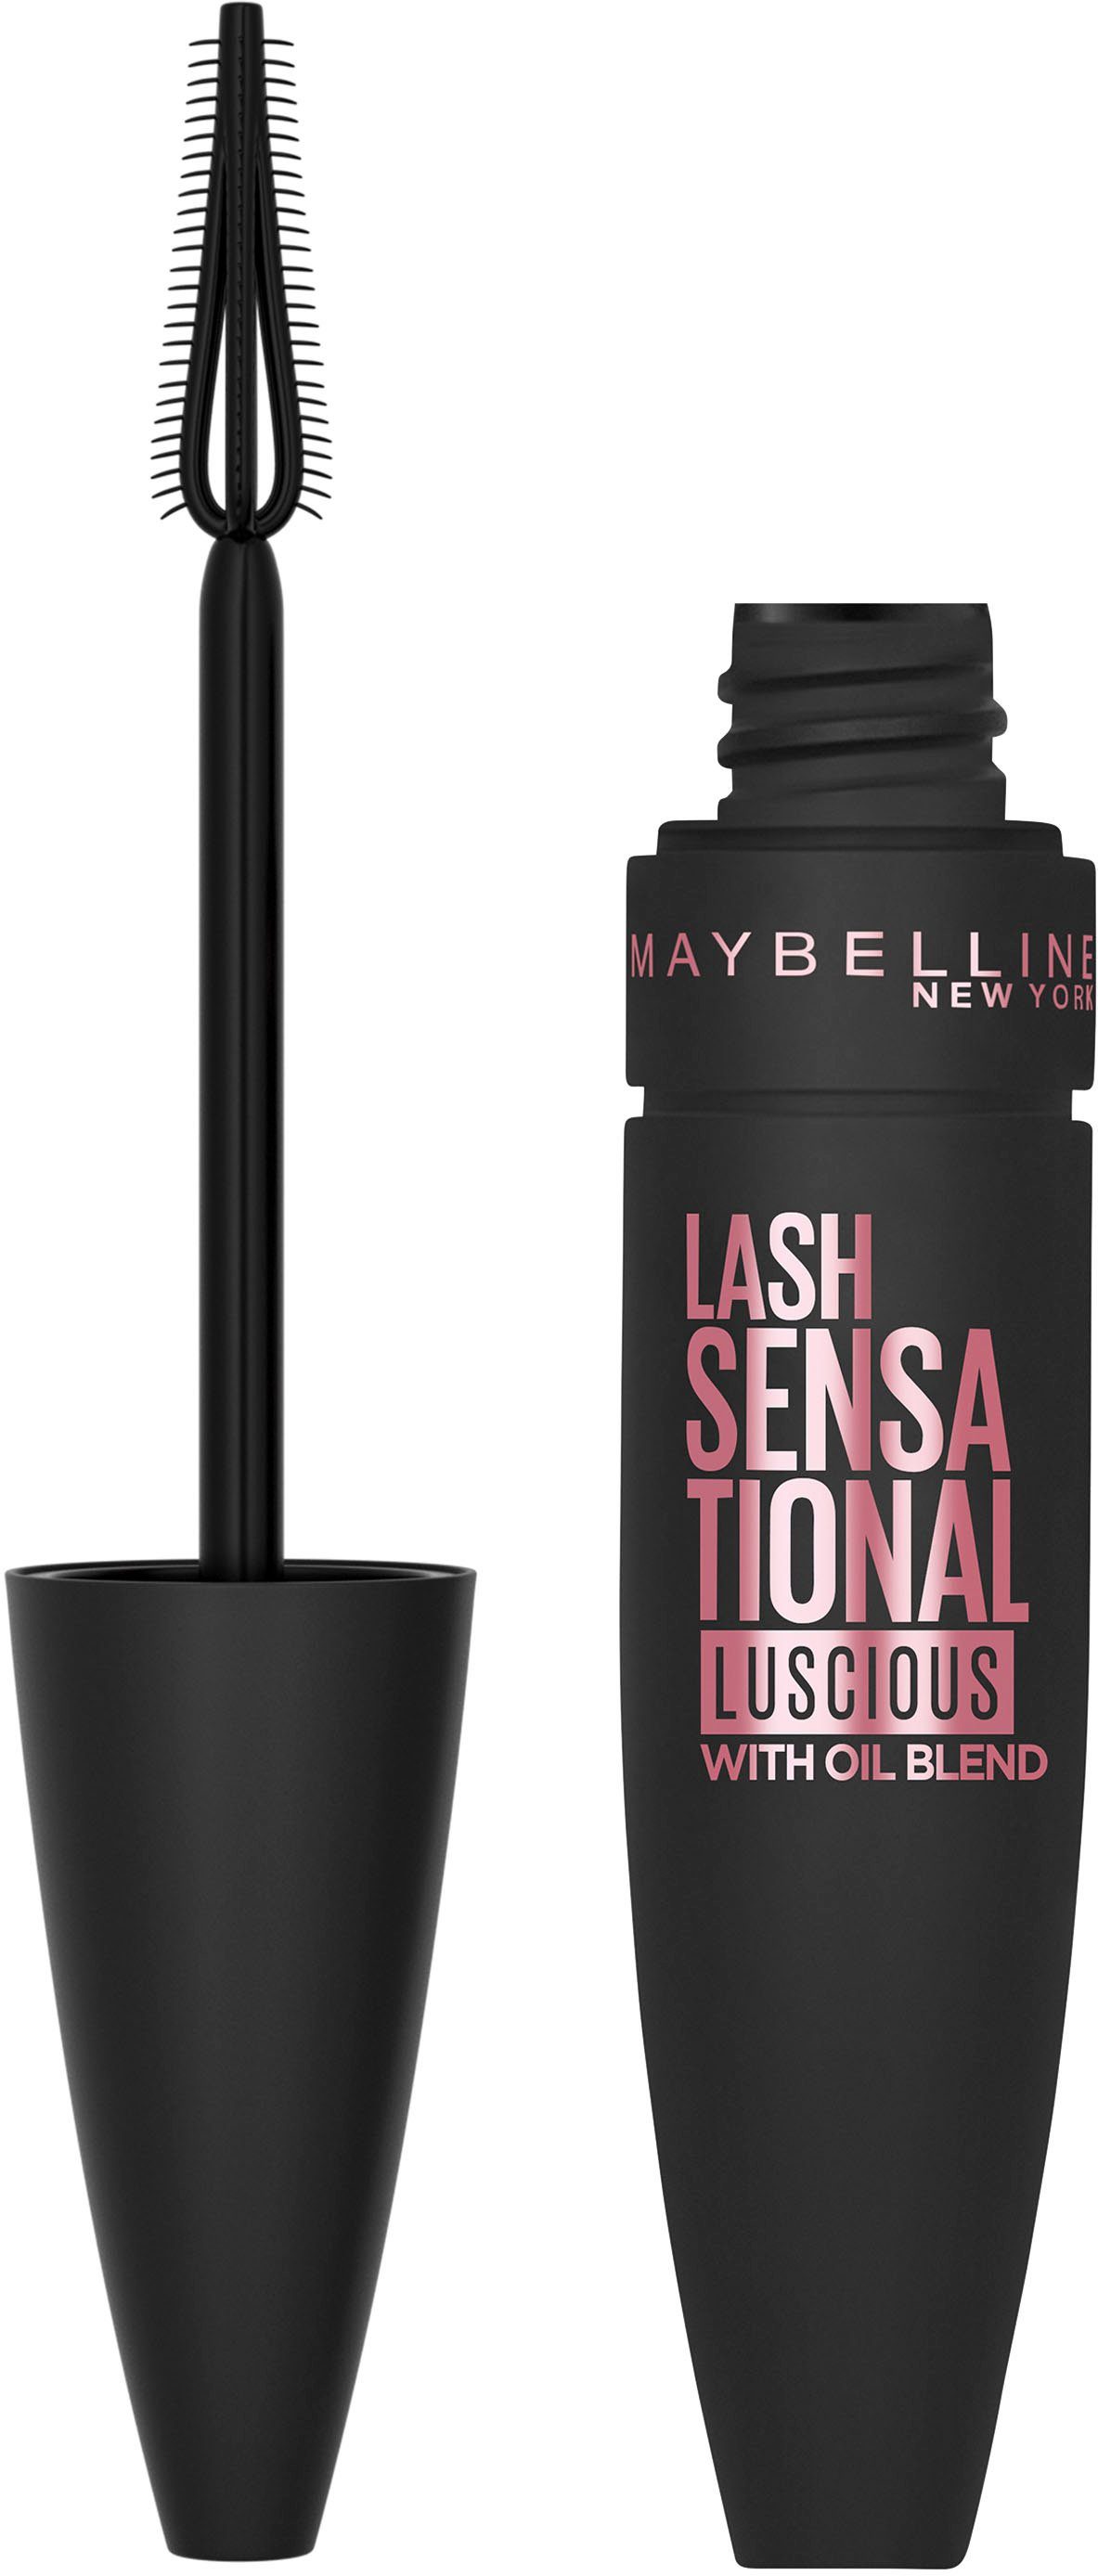 Sensational NEW MAYBELLINE YORK Mascara Lash Luscious